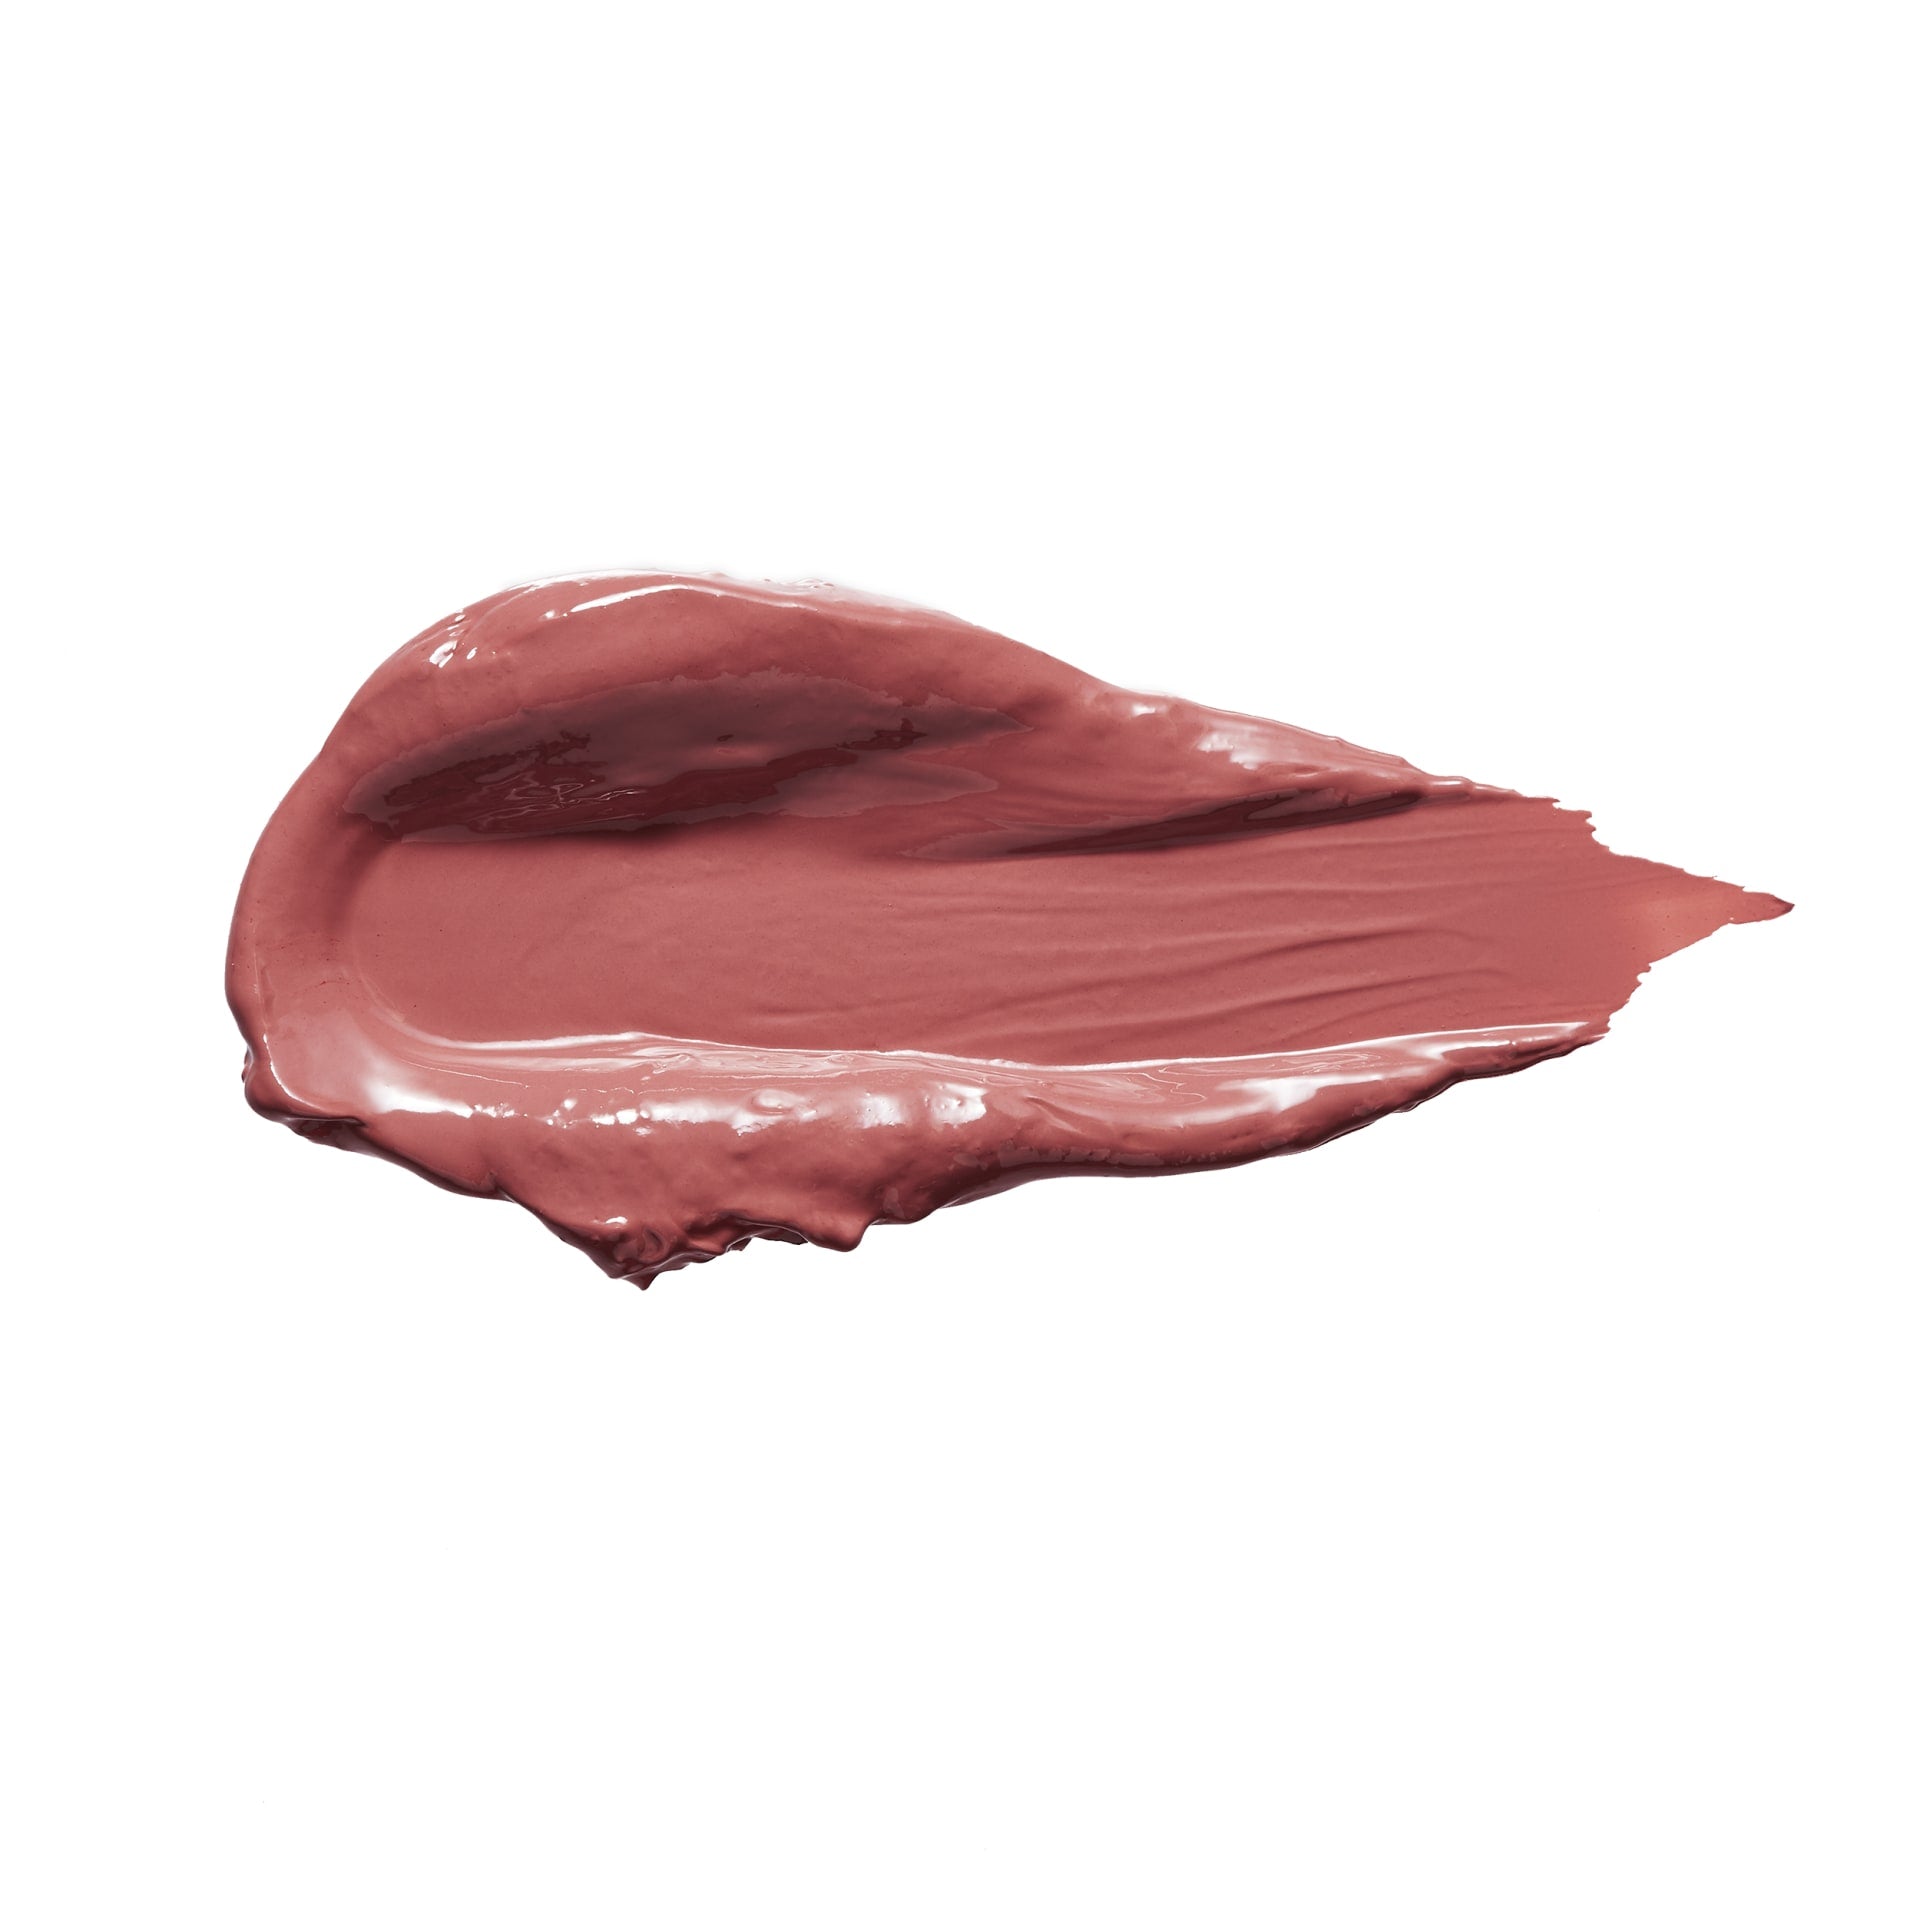 100% PURE Fruit Pigmented Pomegranate Oil Lipstick buttercup